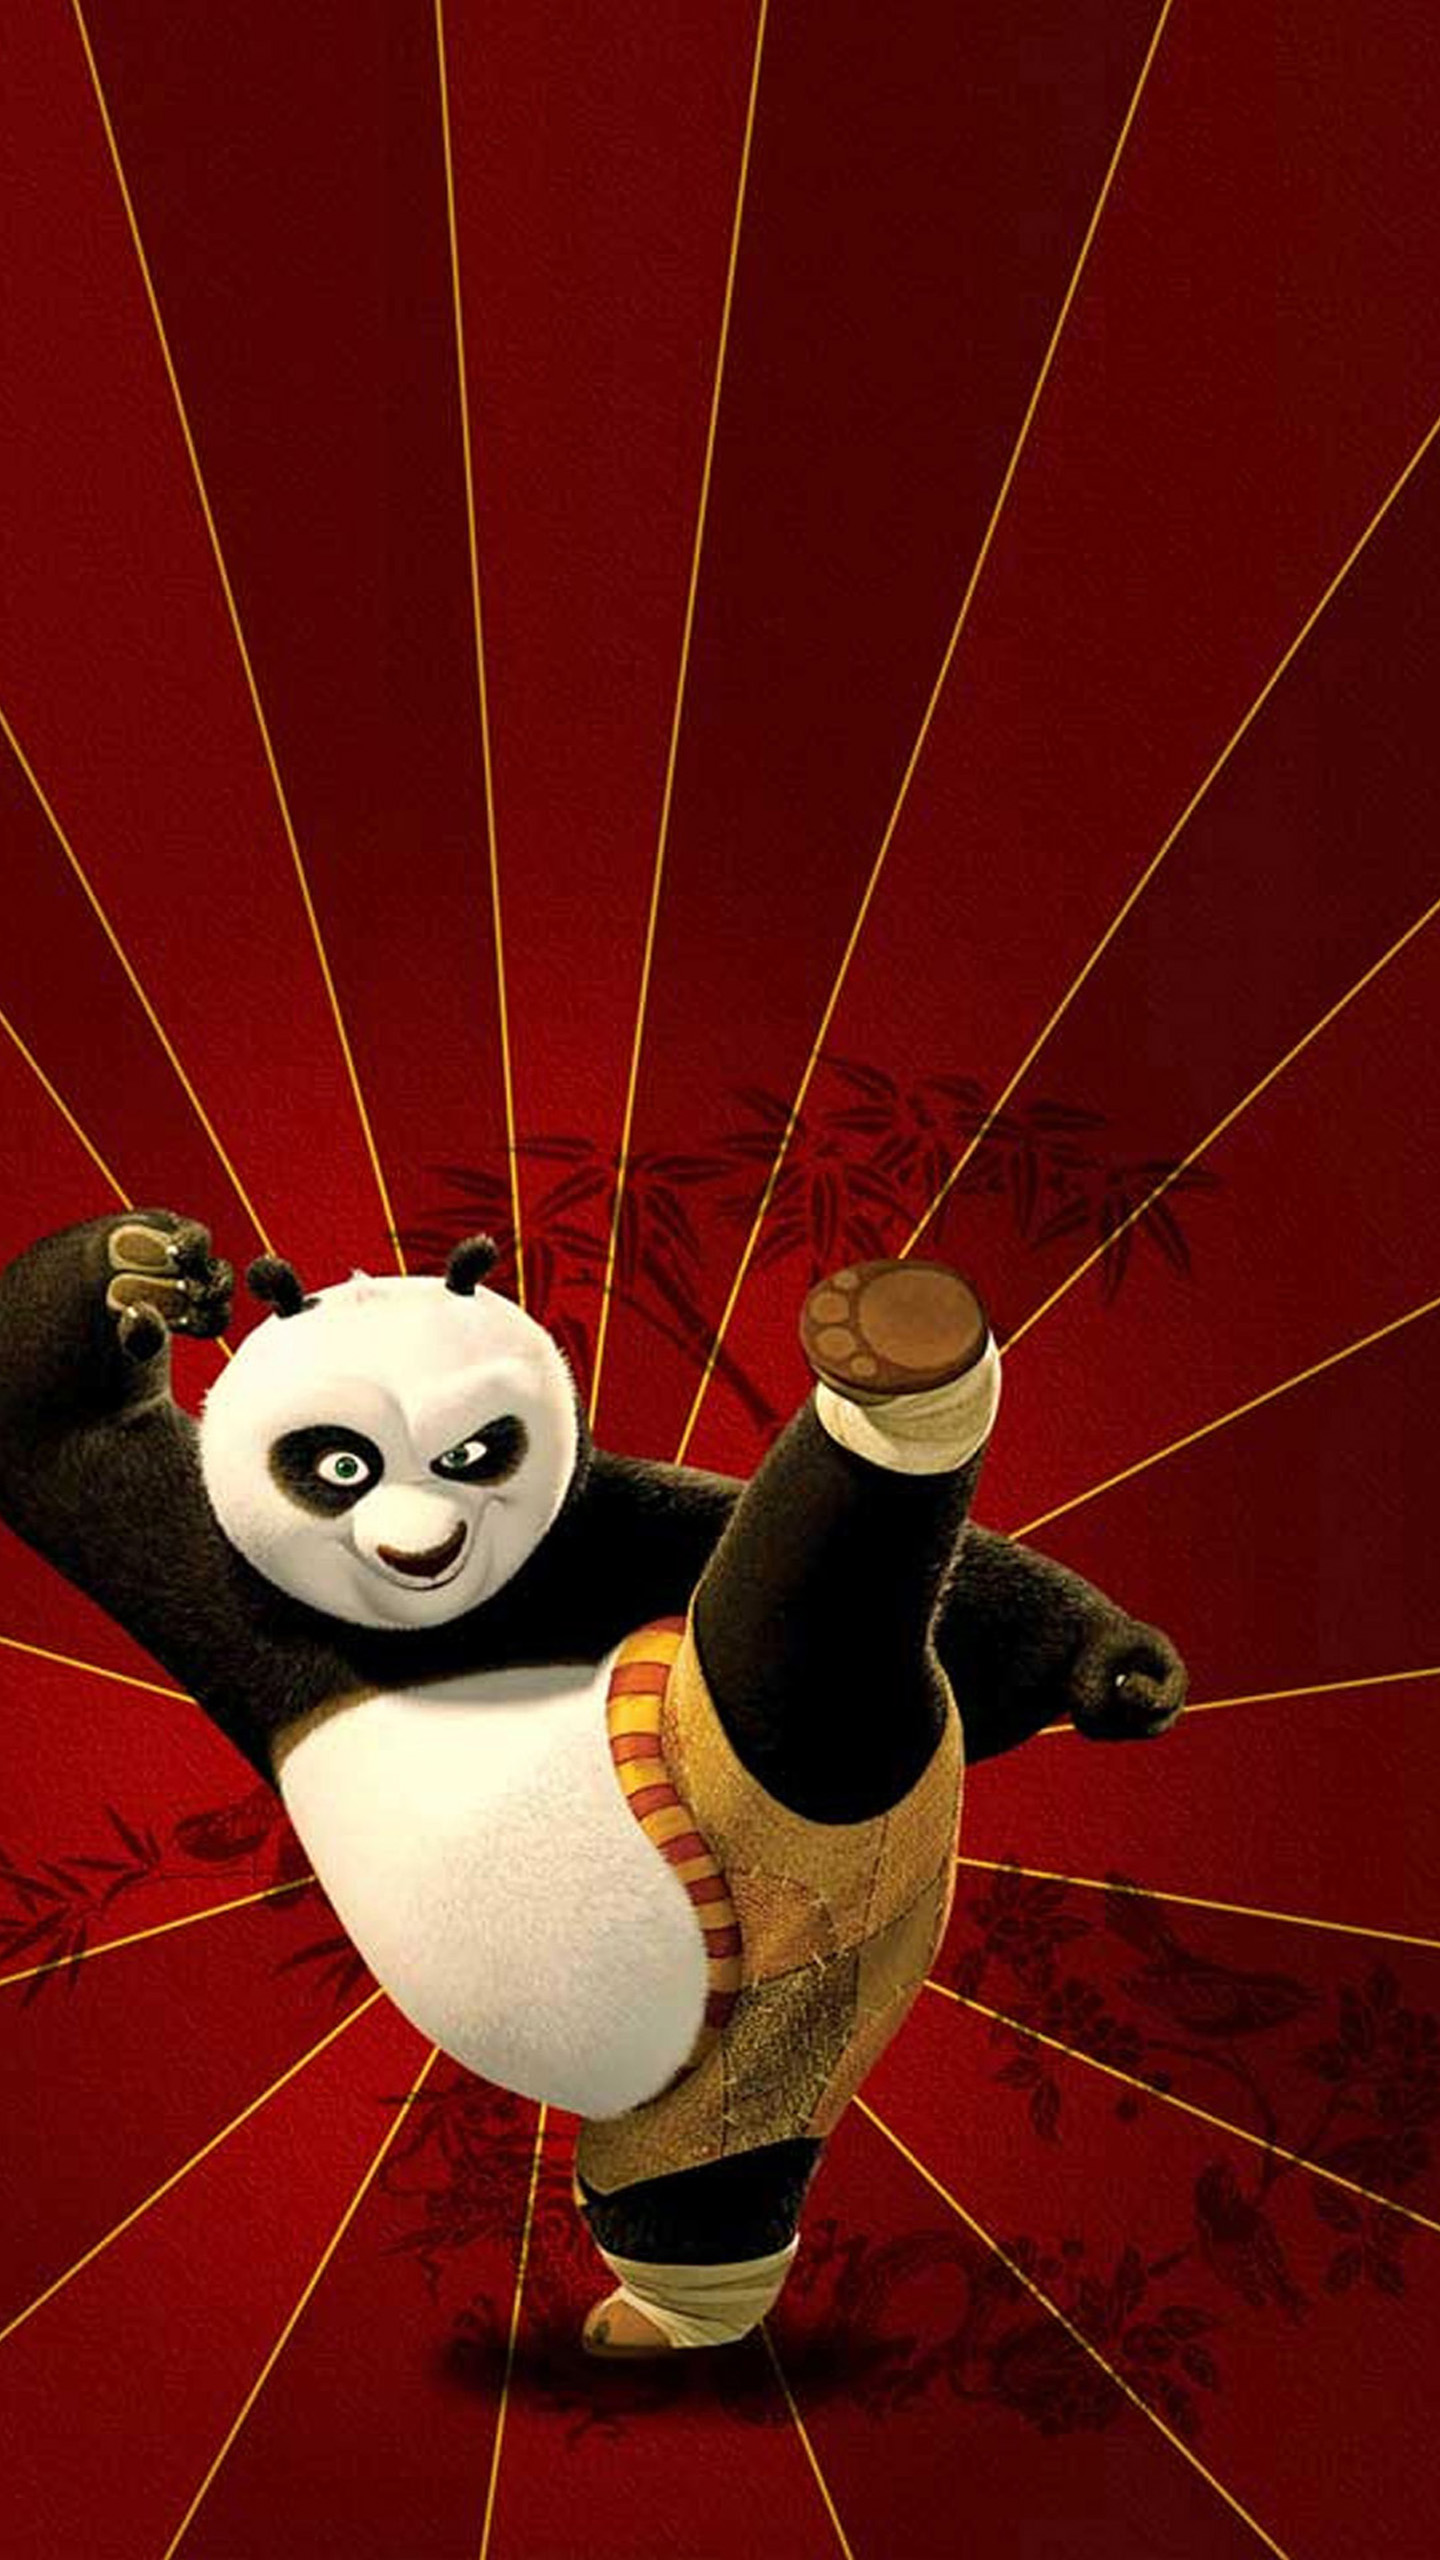 Kung Fu Panda wallpapers for galaxy S6.jpg